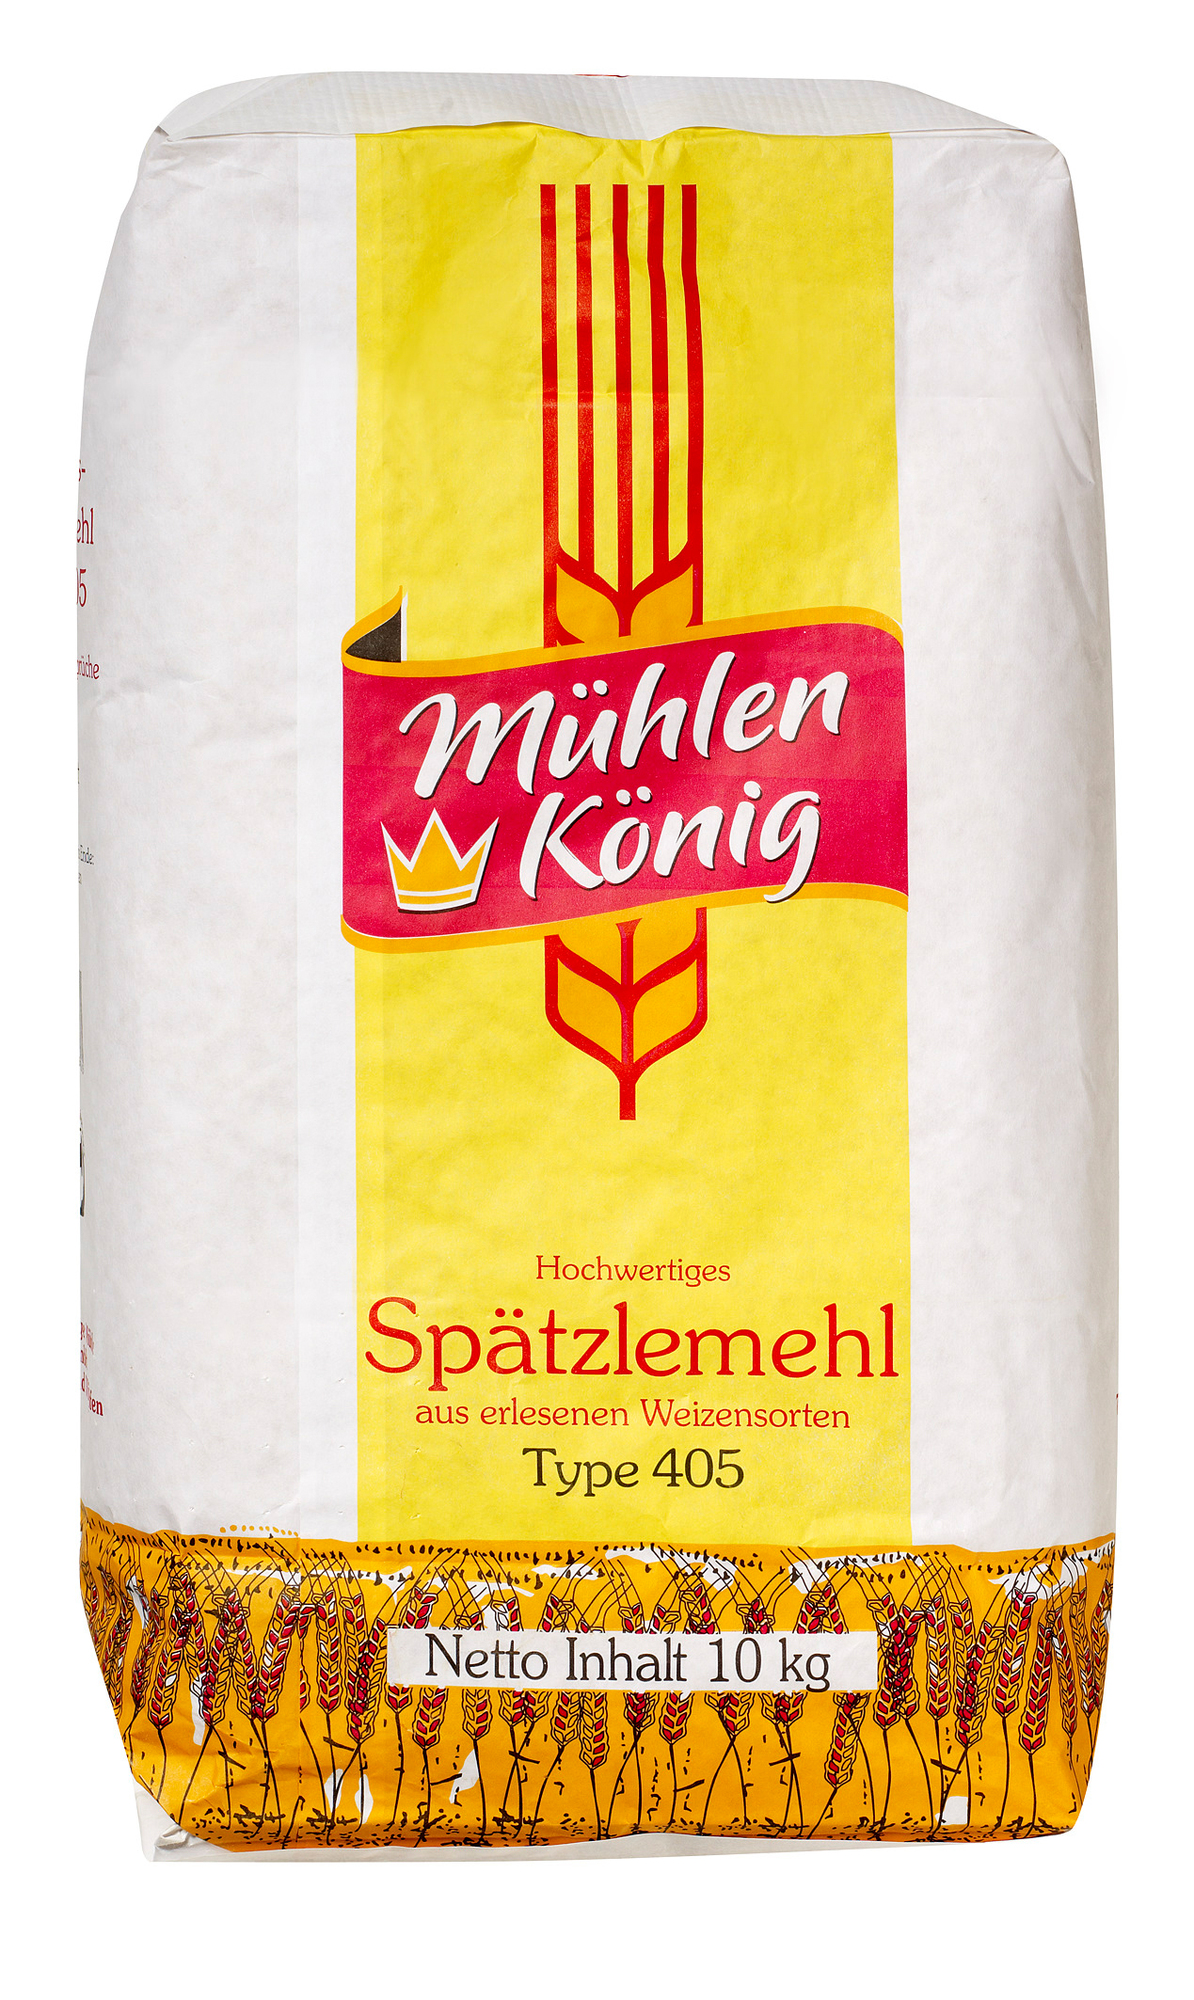 Mühlen König Spätzlemehl Type 405 10kg